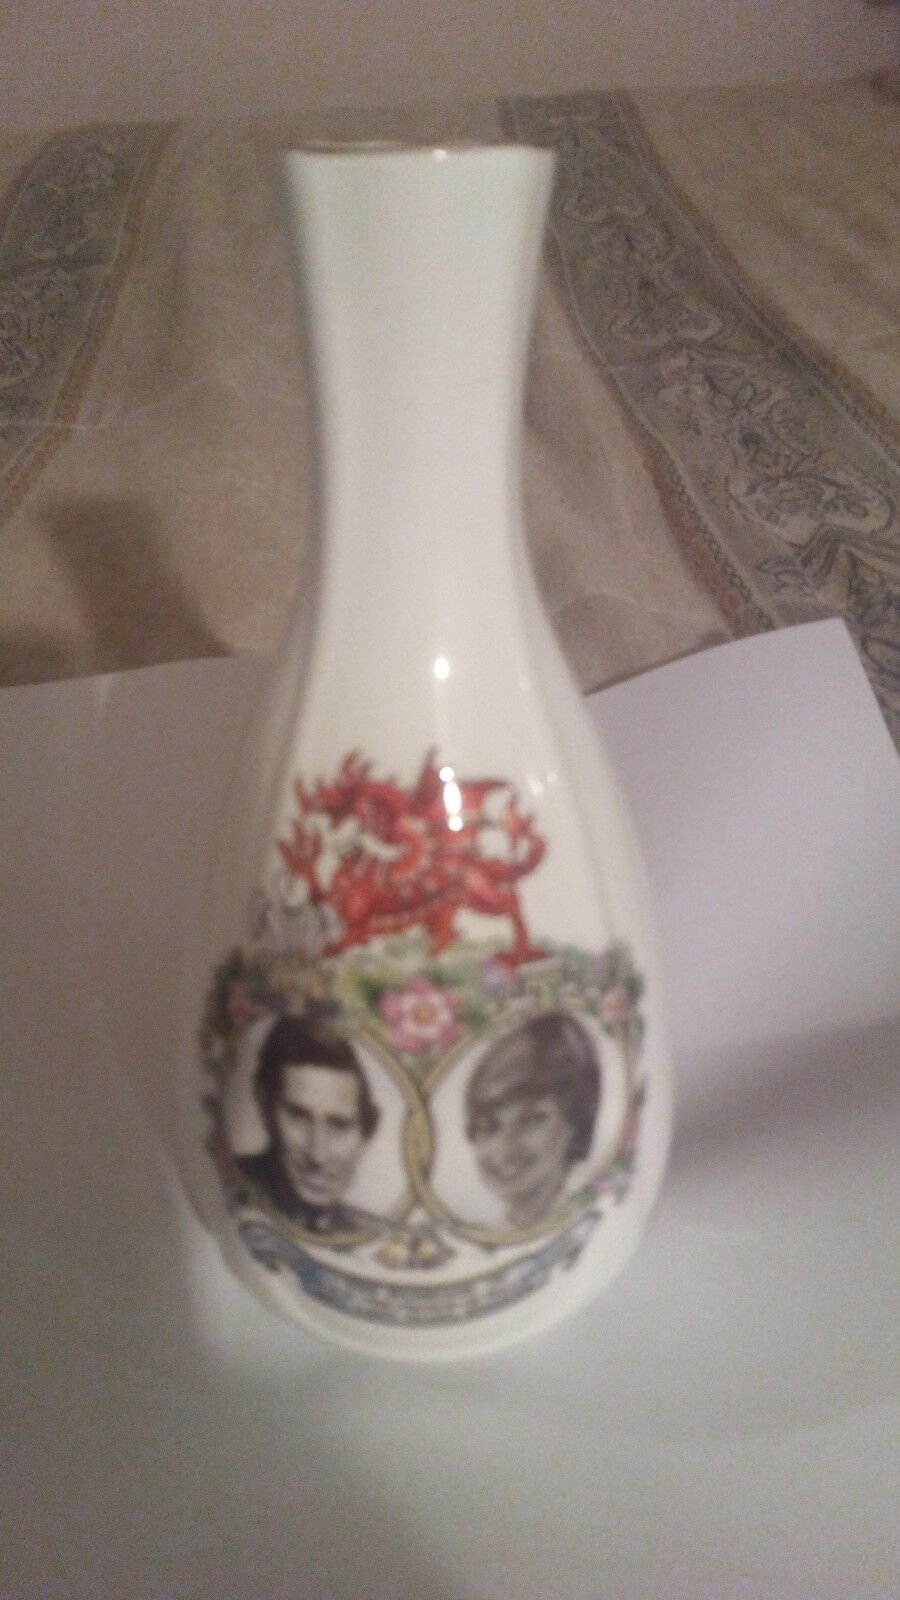 Royal couple - collectable memorabilia - 1981 Porcelain flower vase, 3x6 Inch